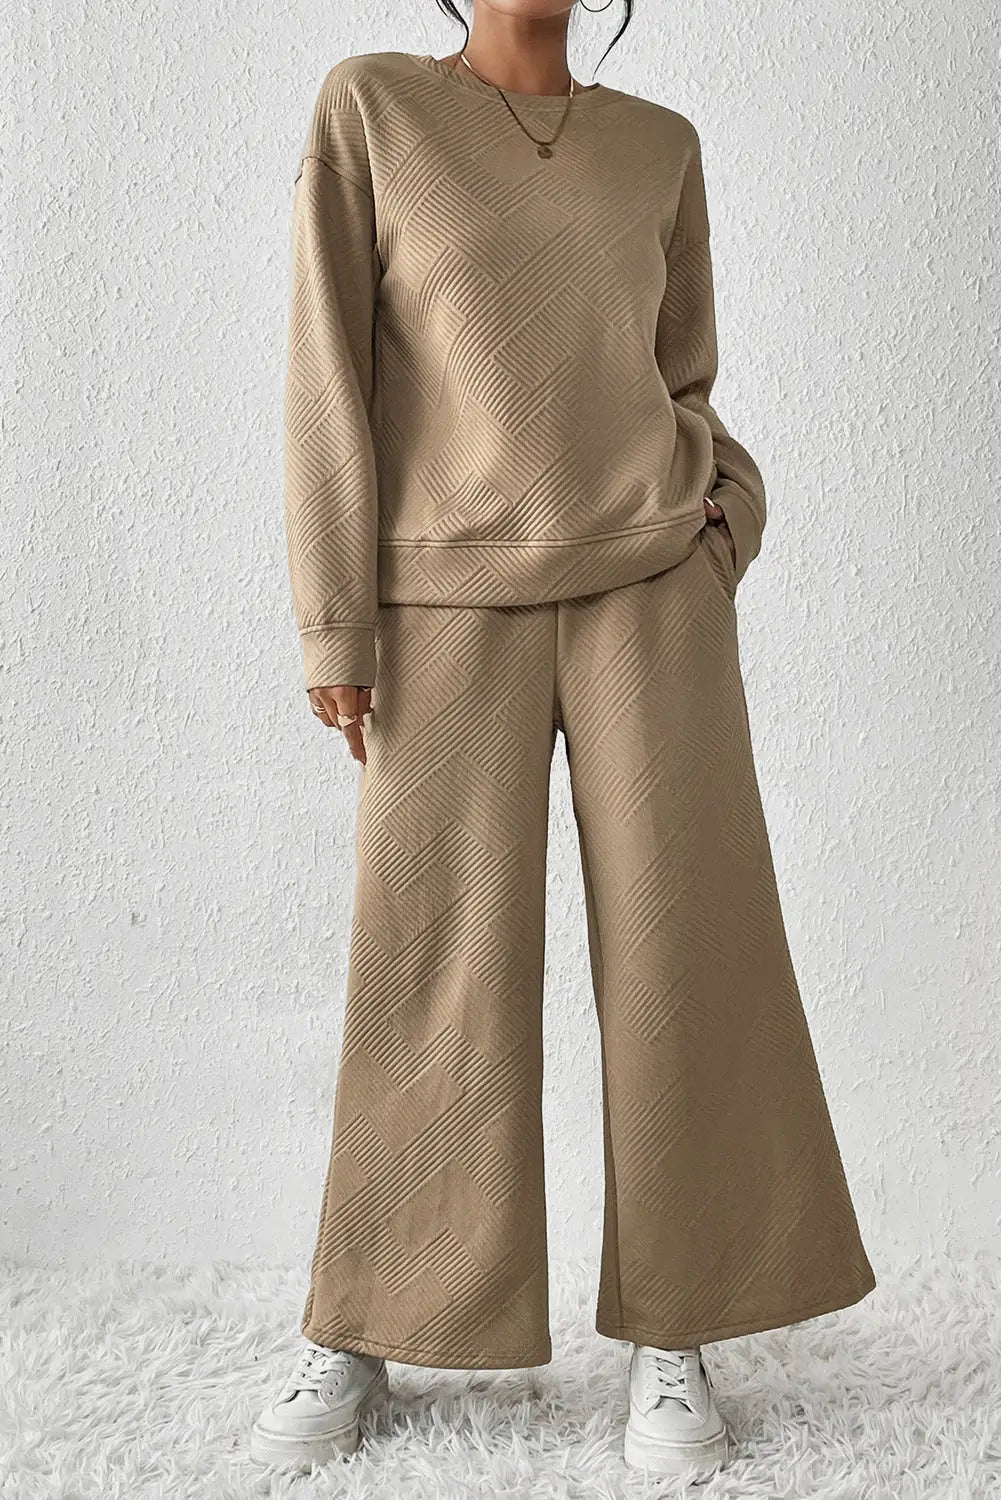 Khaki ultra loose textured 2pcs slouchy outfit - pants sets